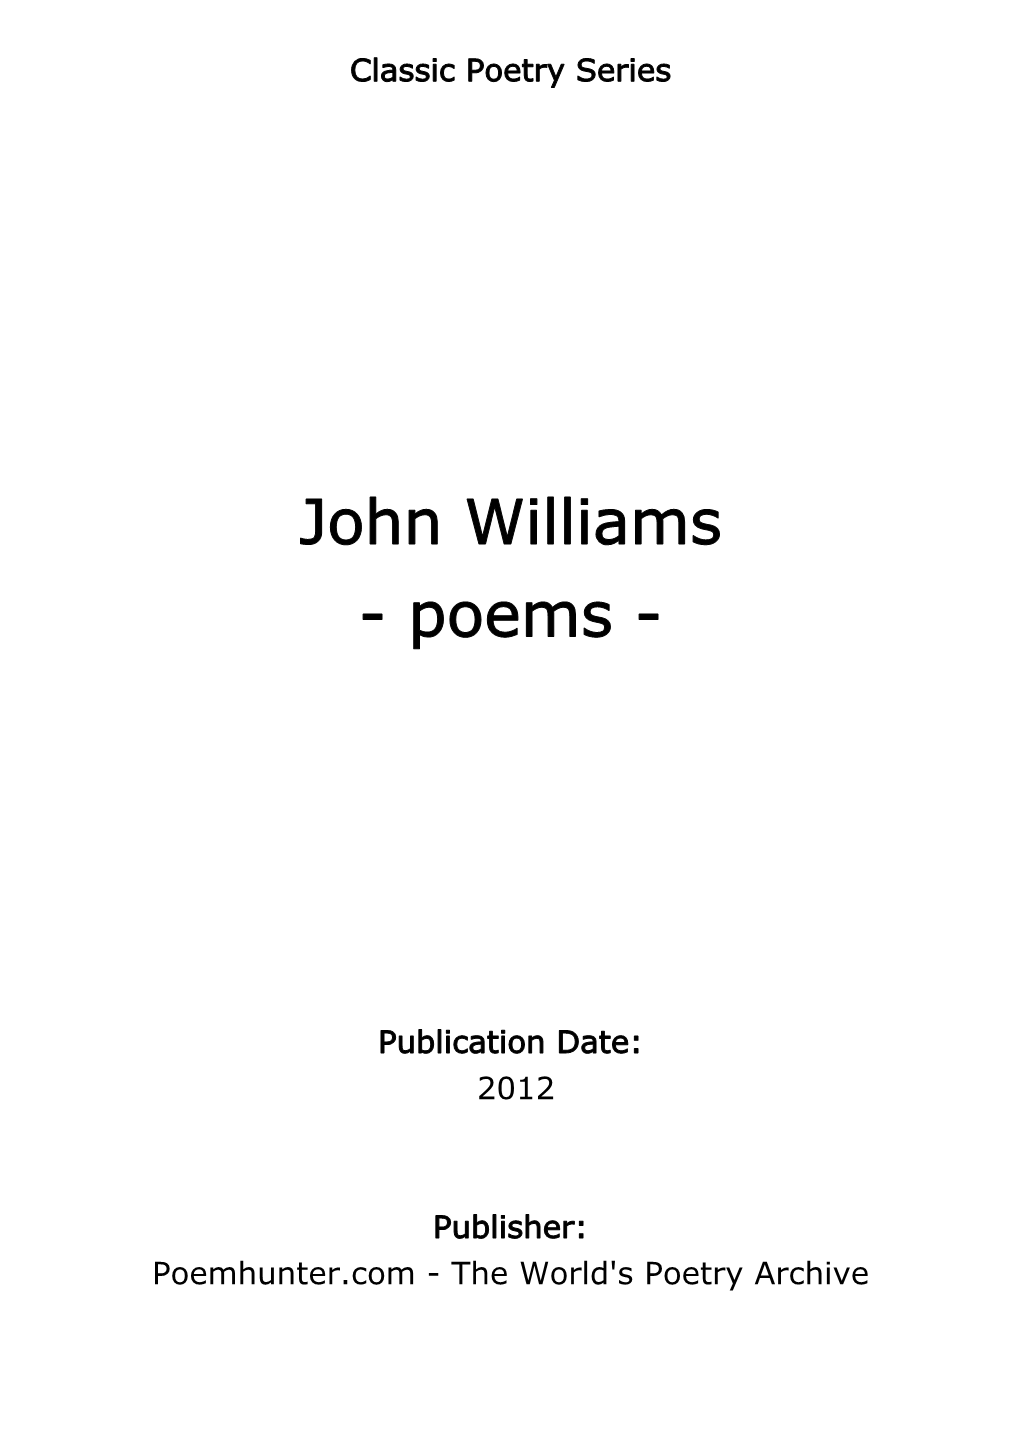 John Williams - Poems